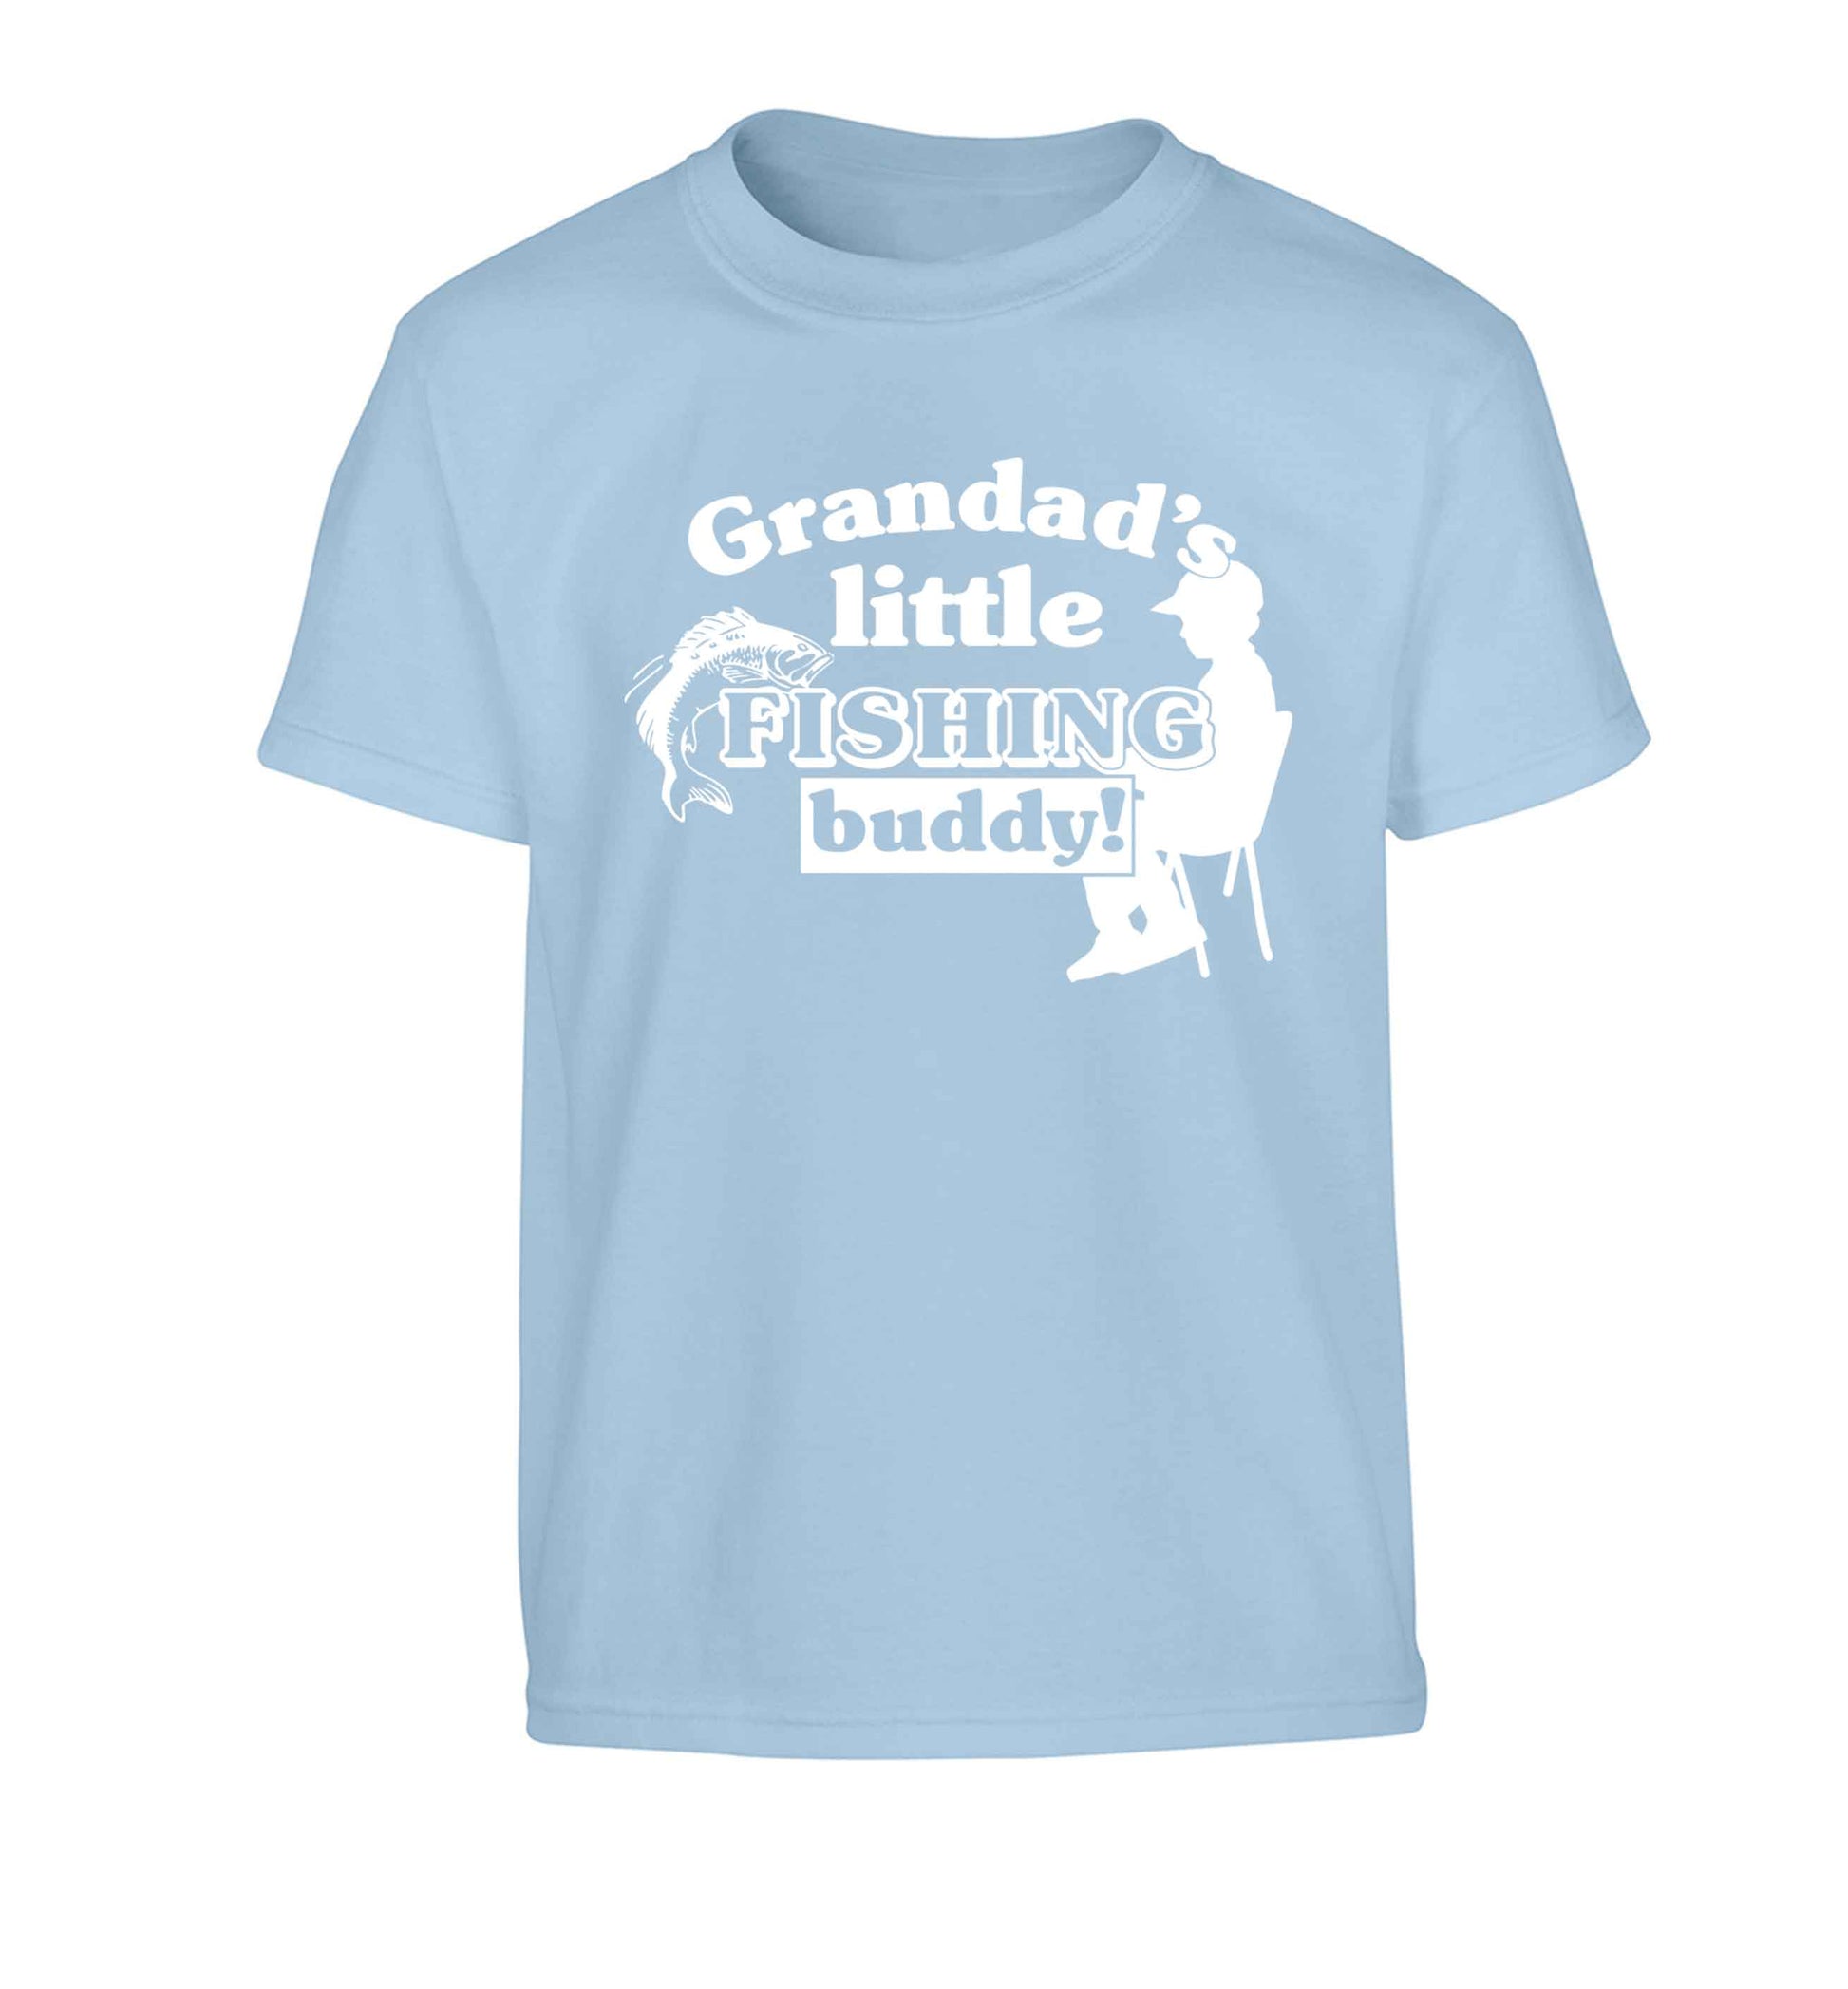 Grandad's little fishing buddy! Children's light blue Tshirt 12-13 Years